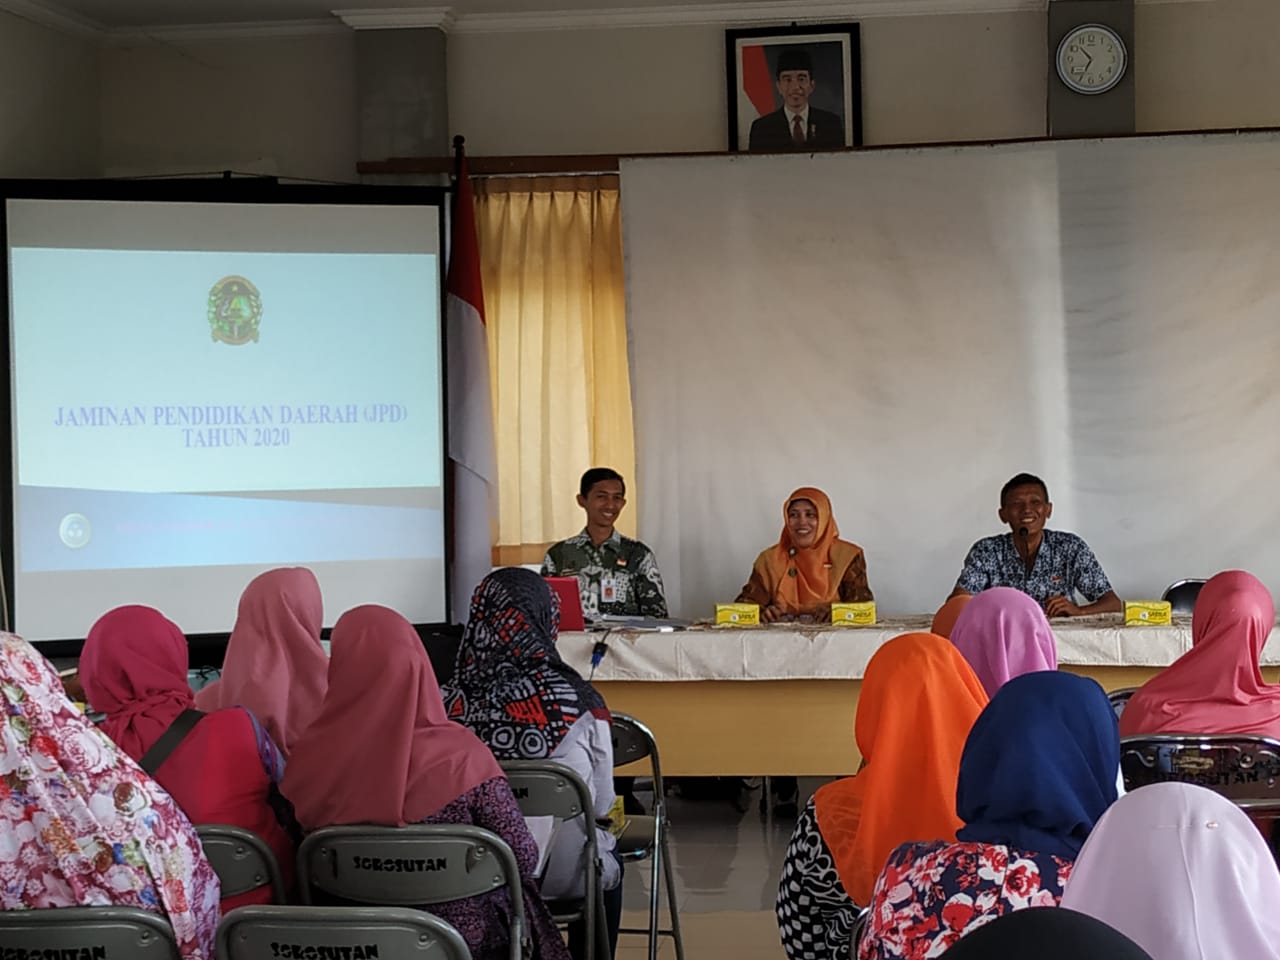 Sosialisasi JPD oleh UPT JPD Dinas Pendidikan Kota Yogyakarta